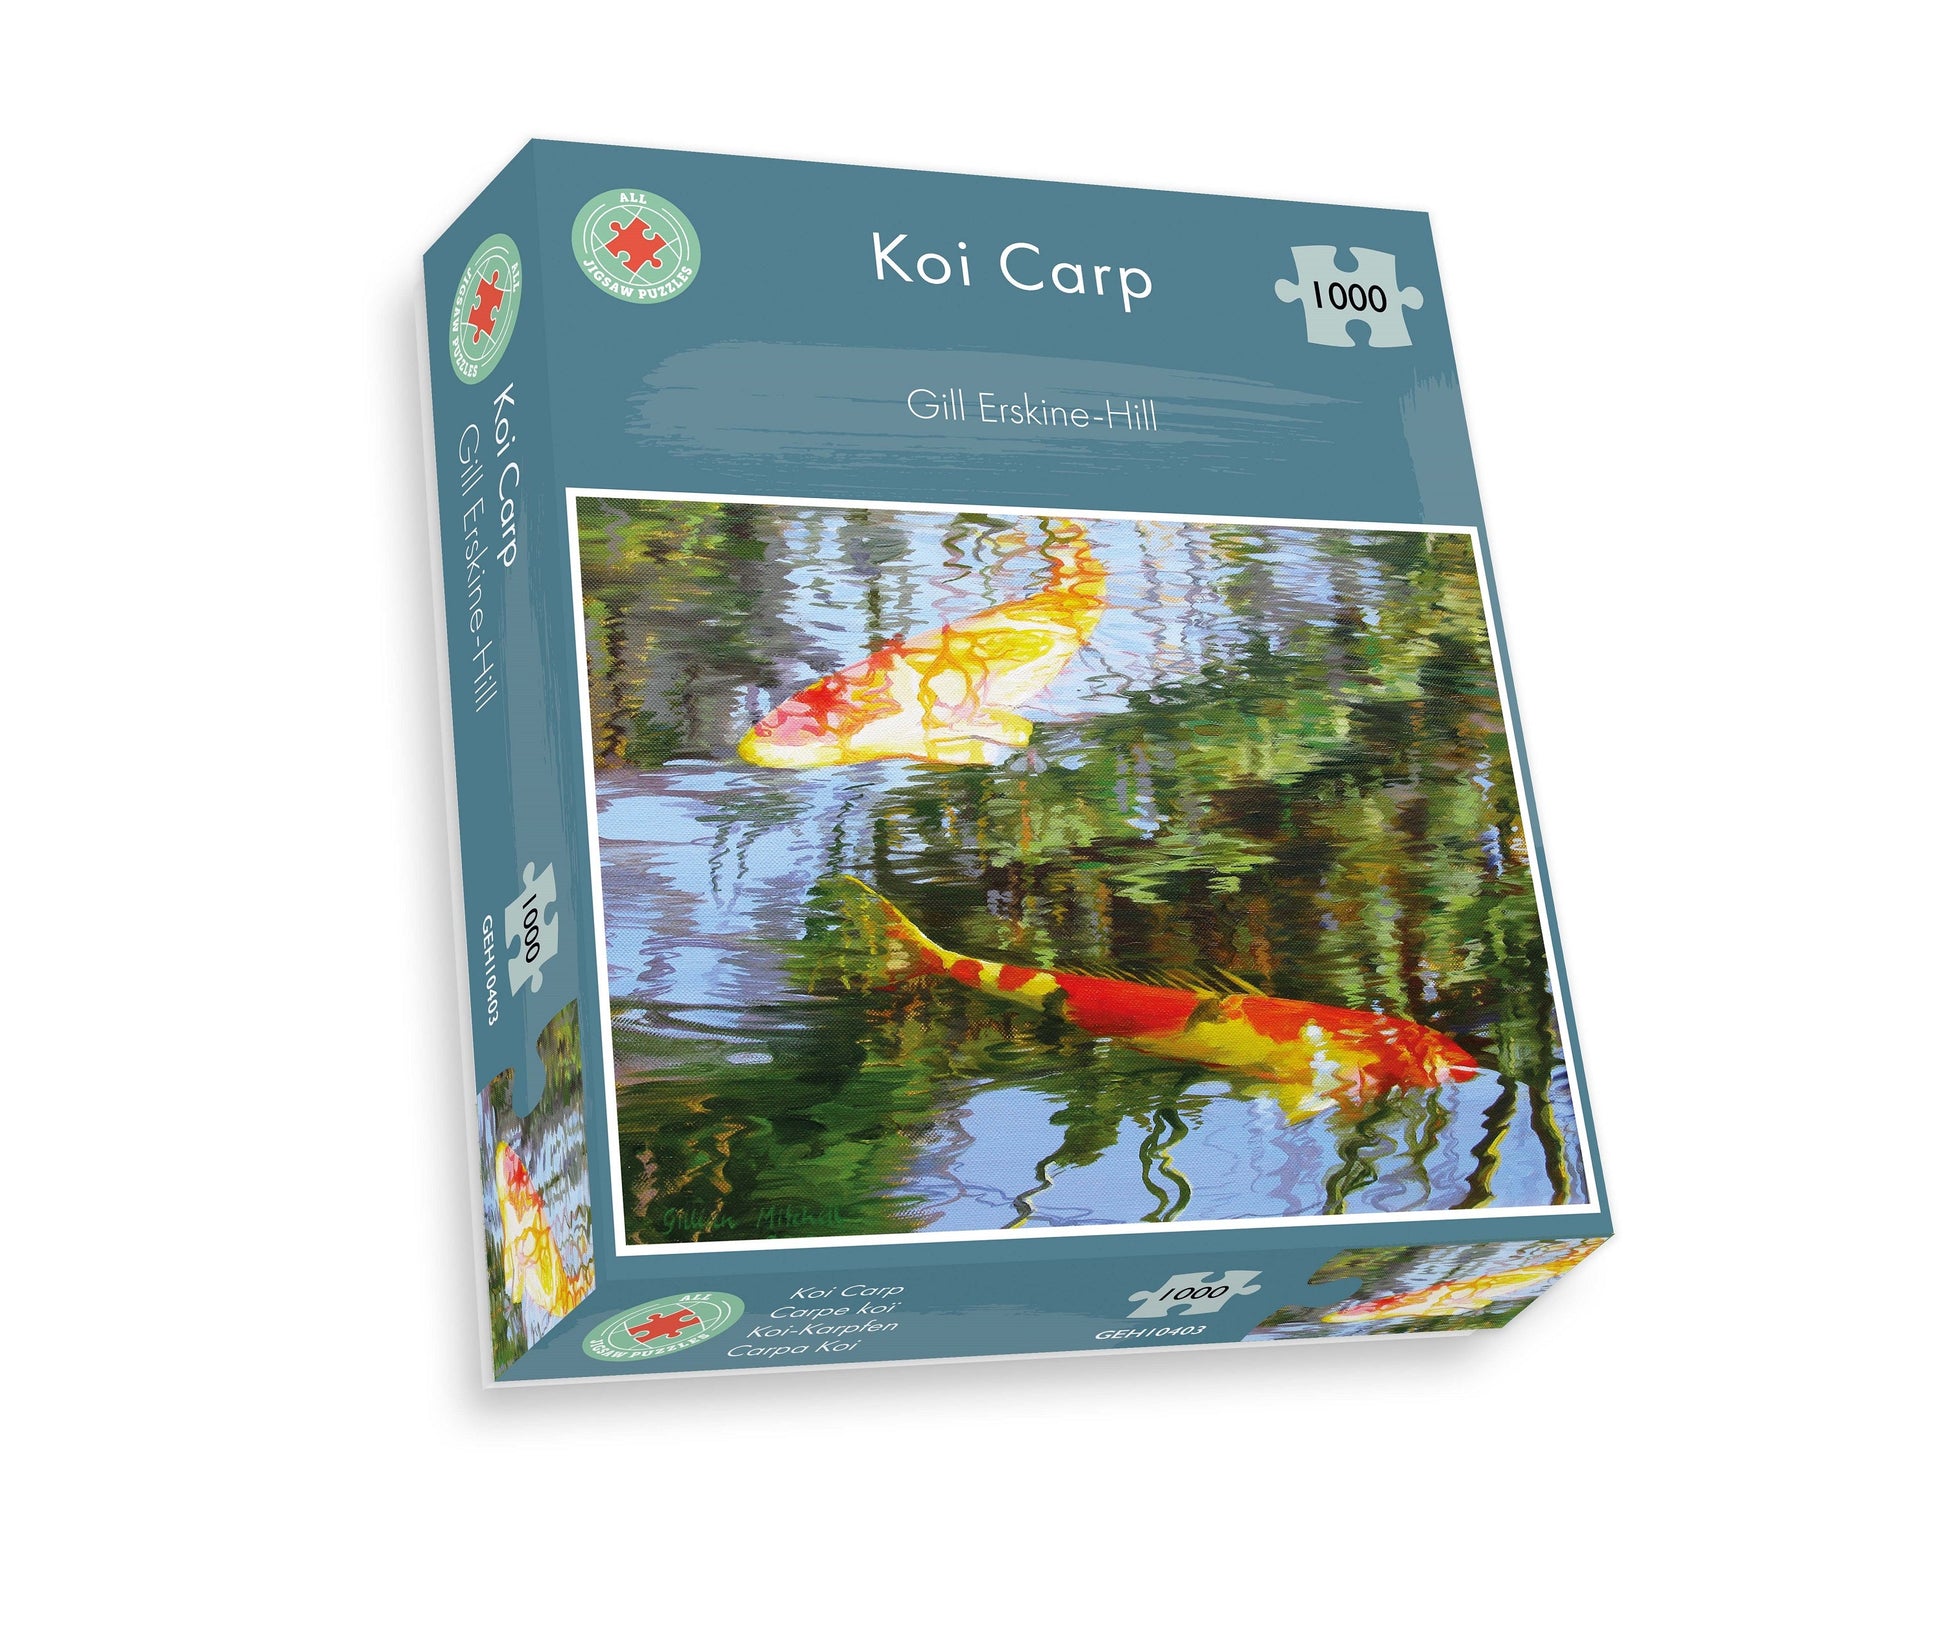 Koi Carp - 1000 Piece Jigsaw Puzzle box